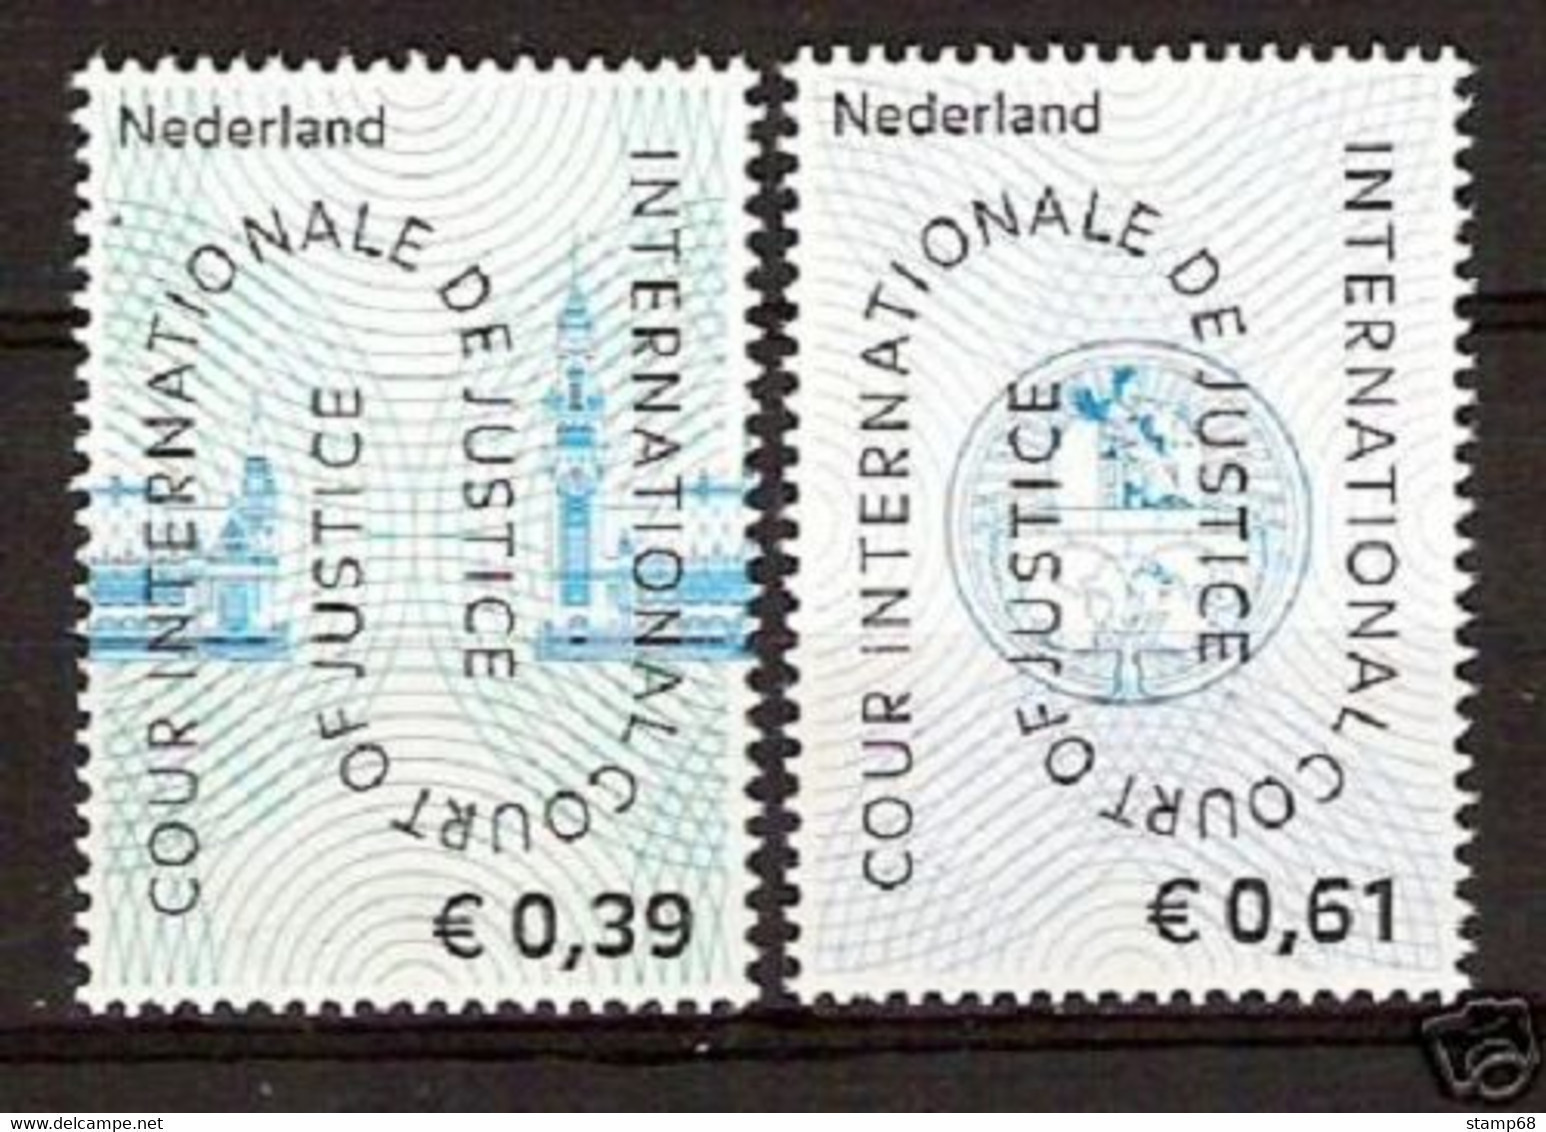 Nederland NVPH D59-60 Cour De Justice 2004 MNH Postfris - Dienstmarken